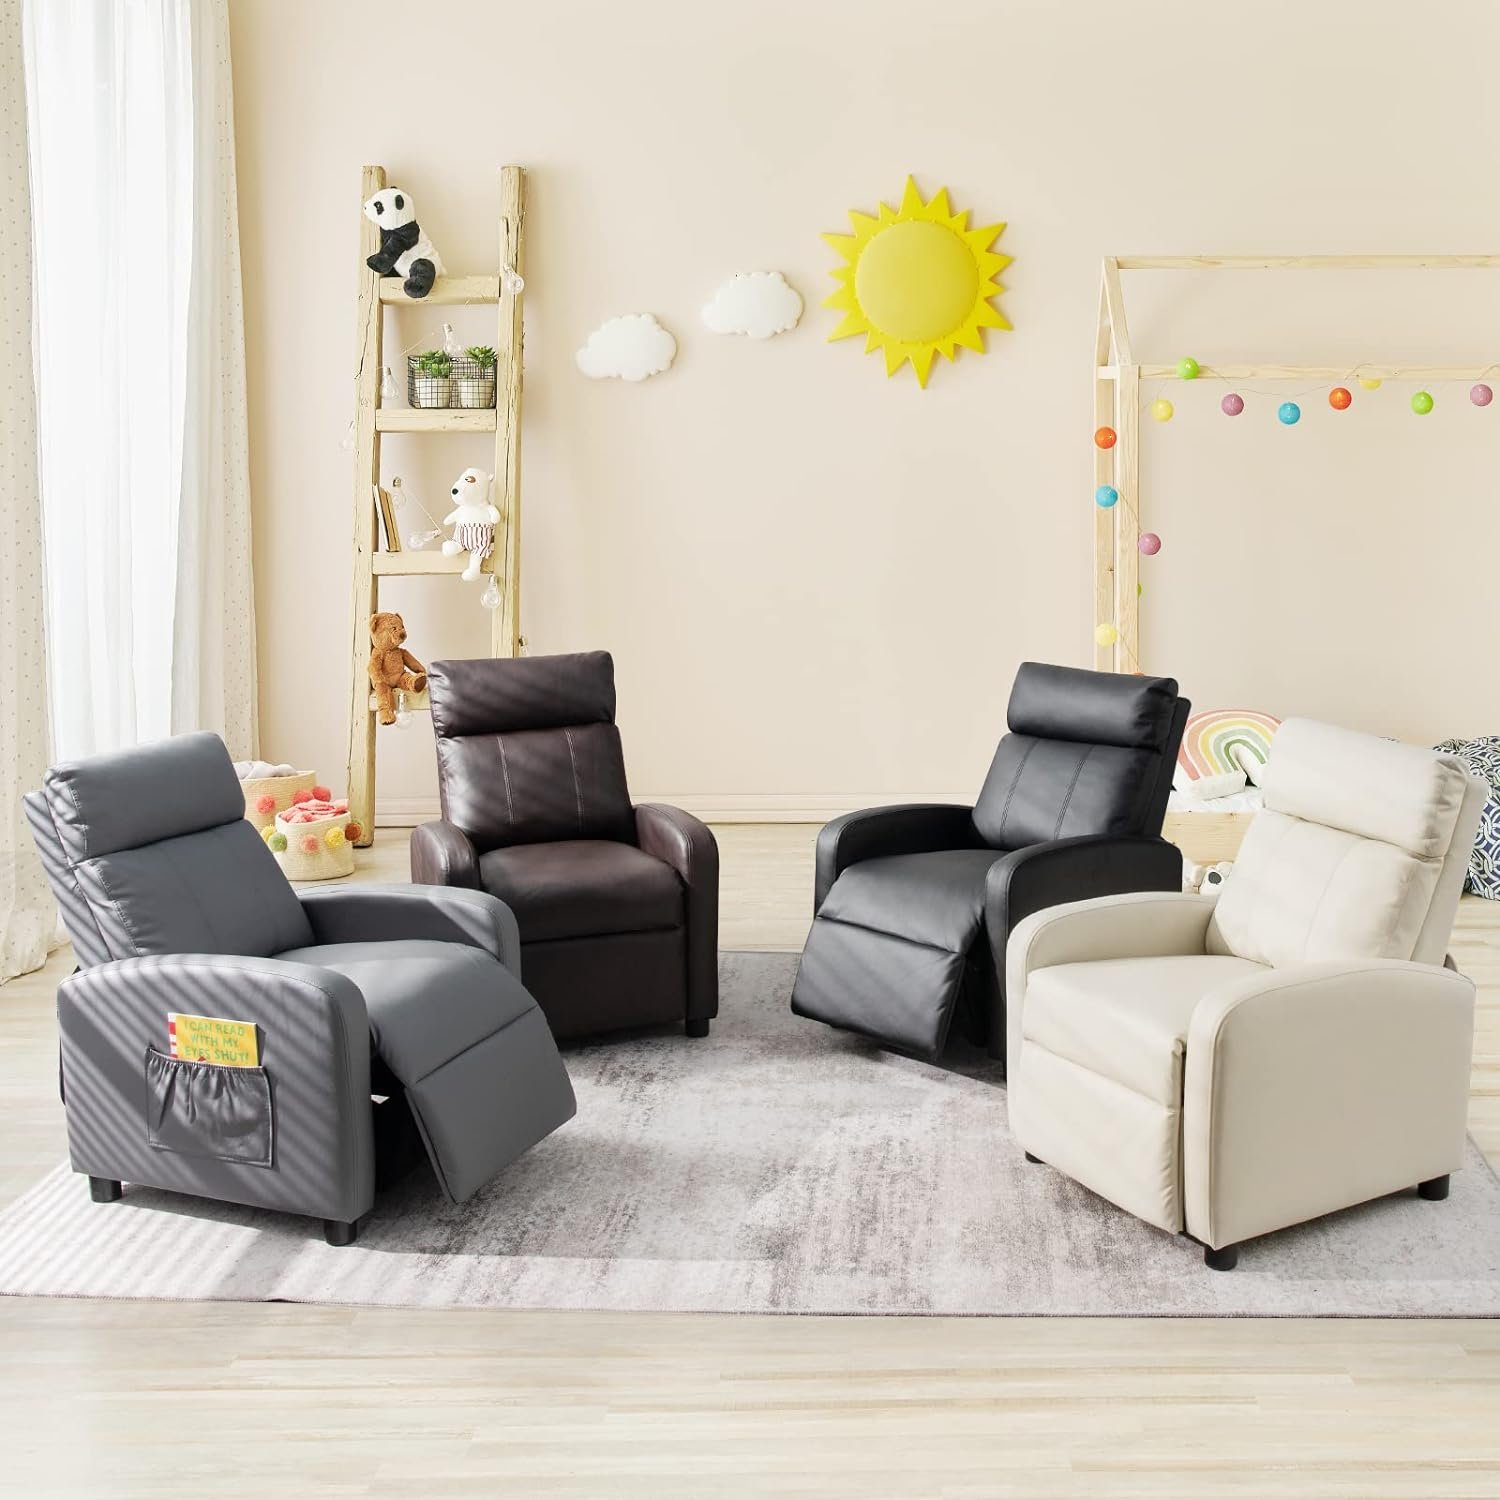 Costzon Kids Recliner Lounge Chair, Adjustable PU Leather, Sturdy Wooden Frame, Waterproof, Grey, Unisex, 3-12 Years